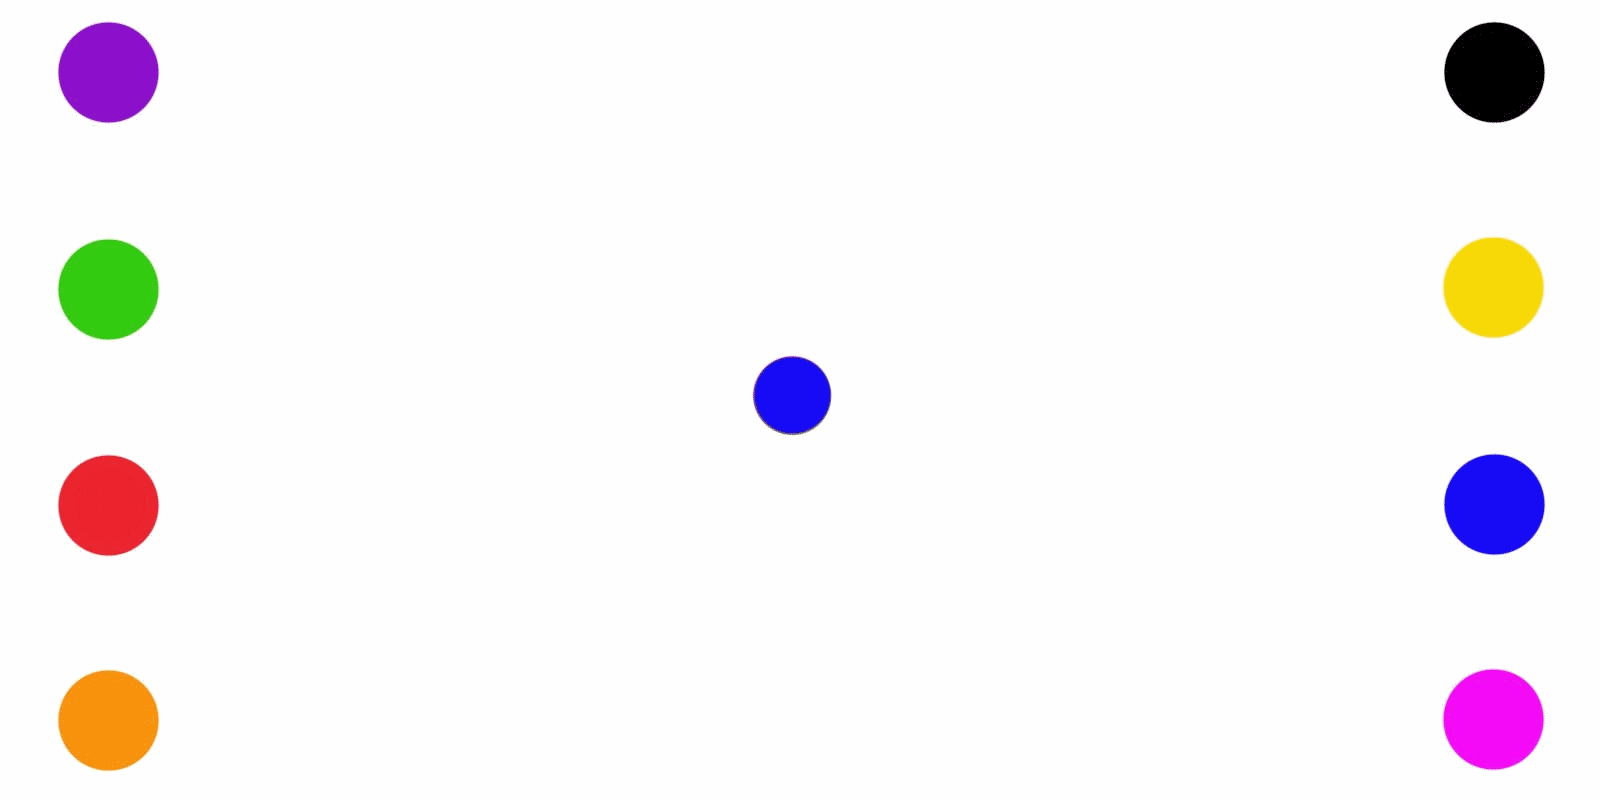 Periphery Circles Animation